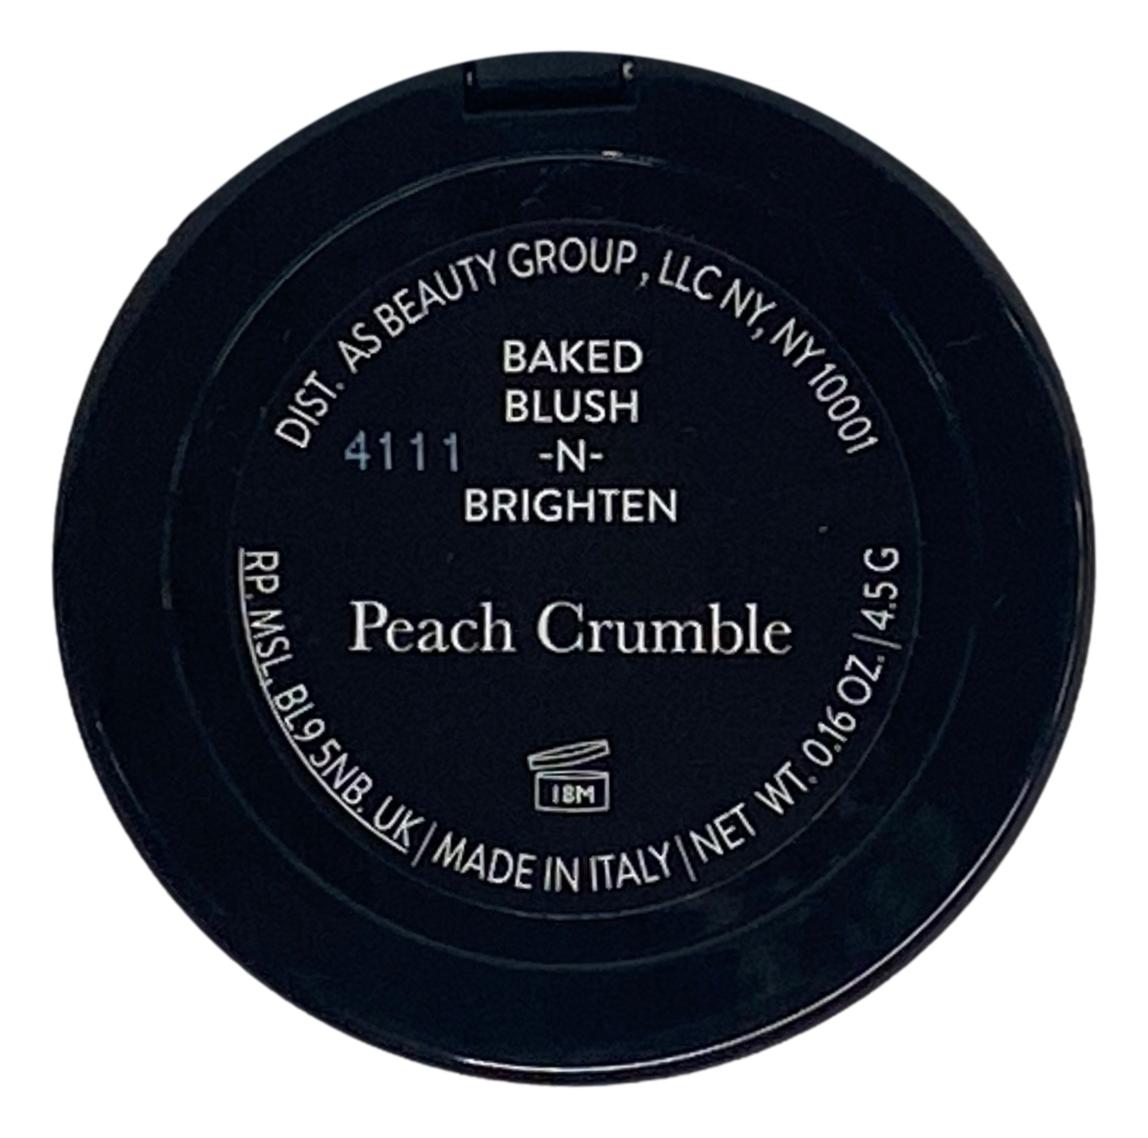 LAURA GELLER Blush n Brighten Peach Crumble (4.4g) plus brush